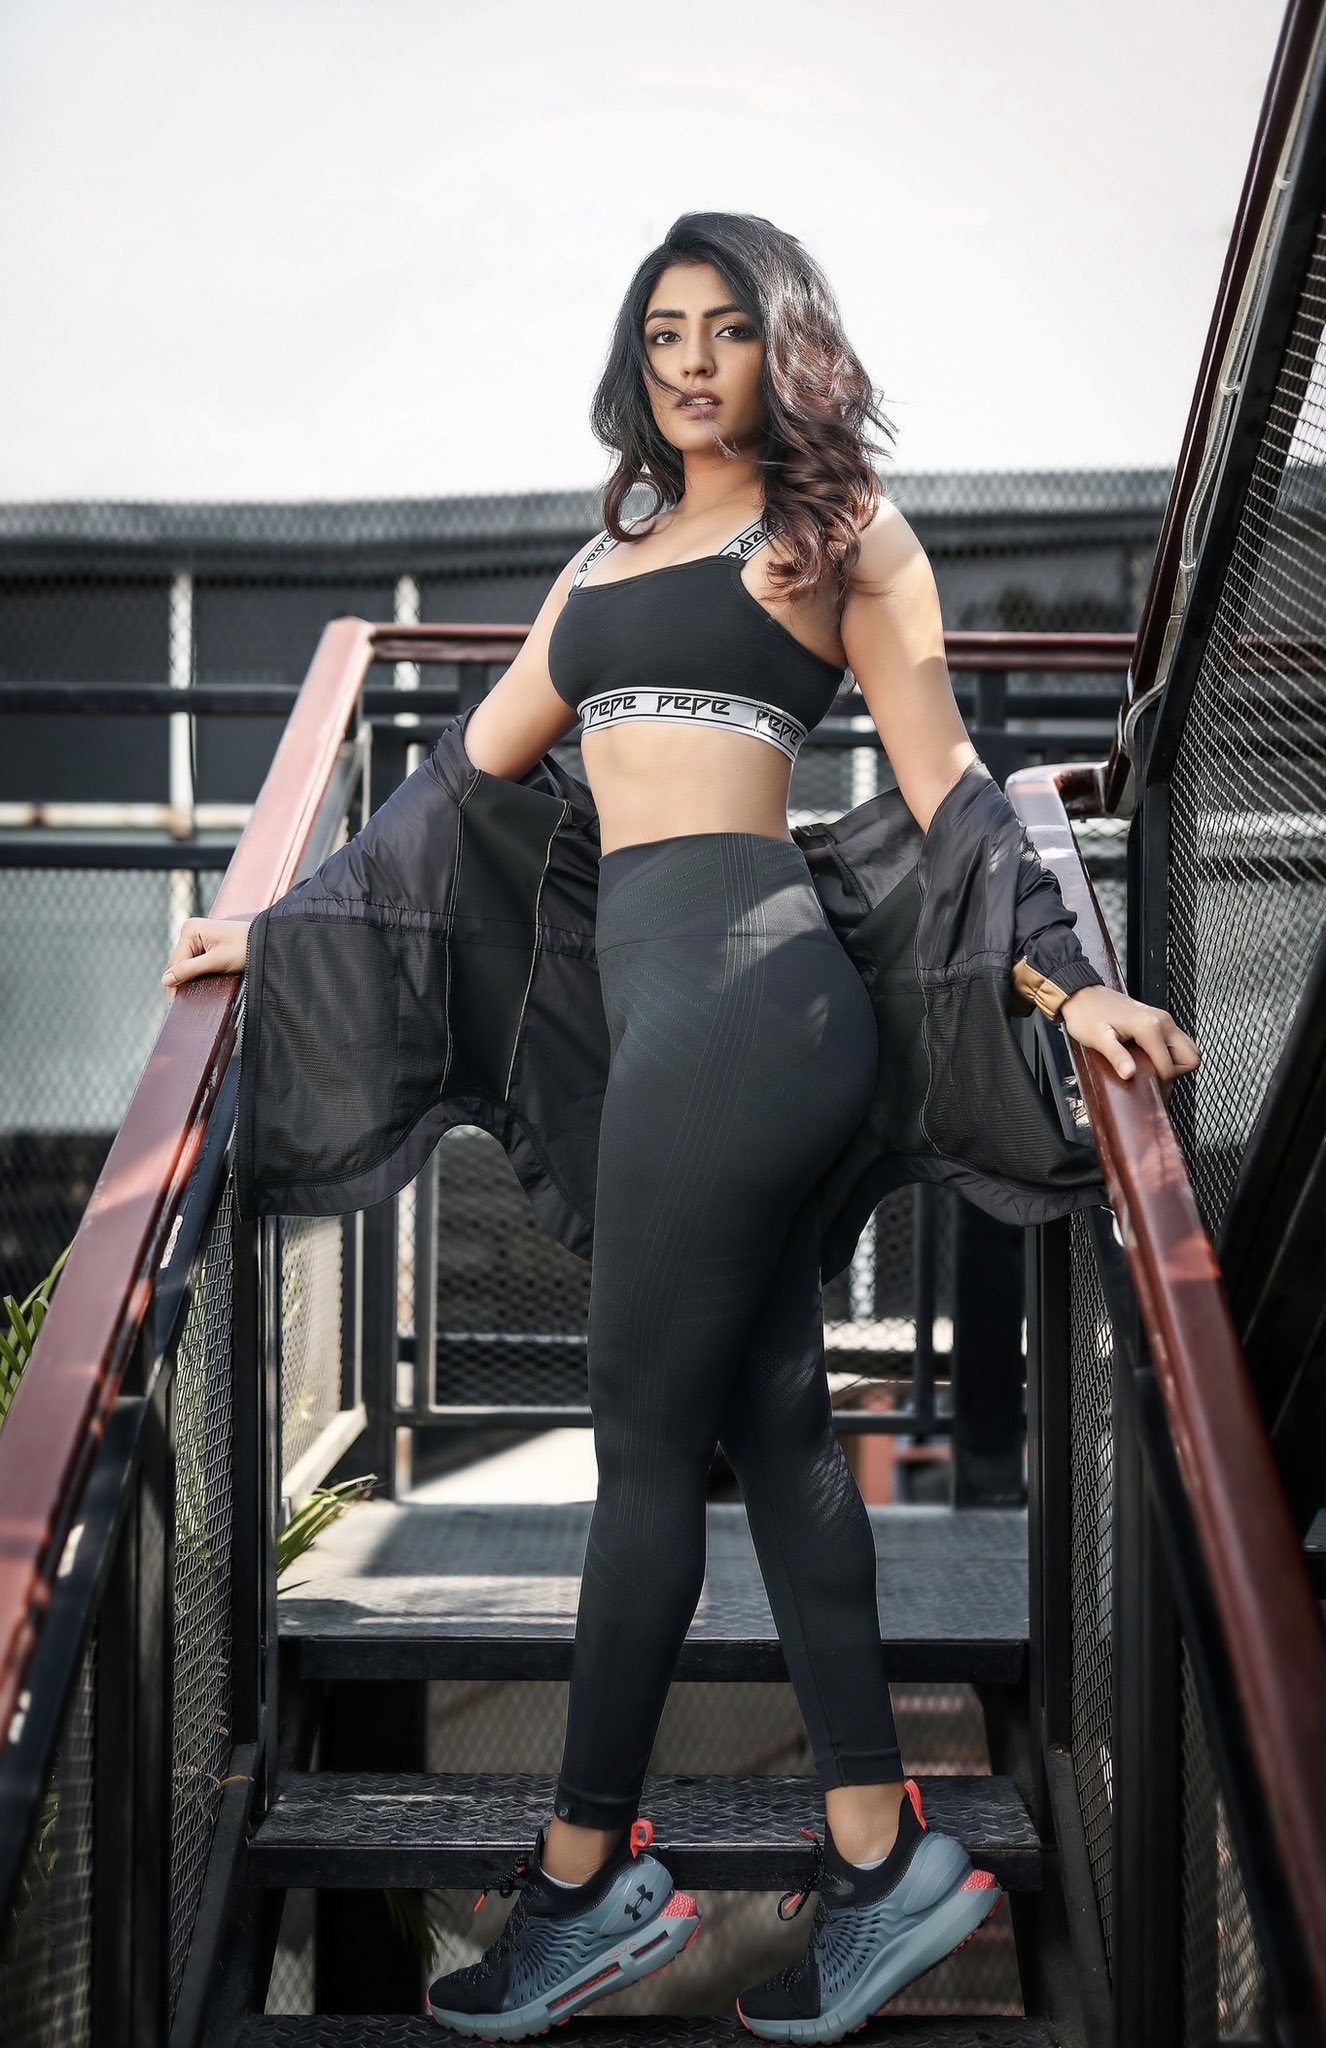 Eesha Rebba Stunning looks in Gym Wear